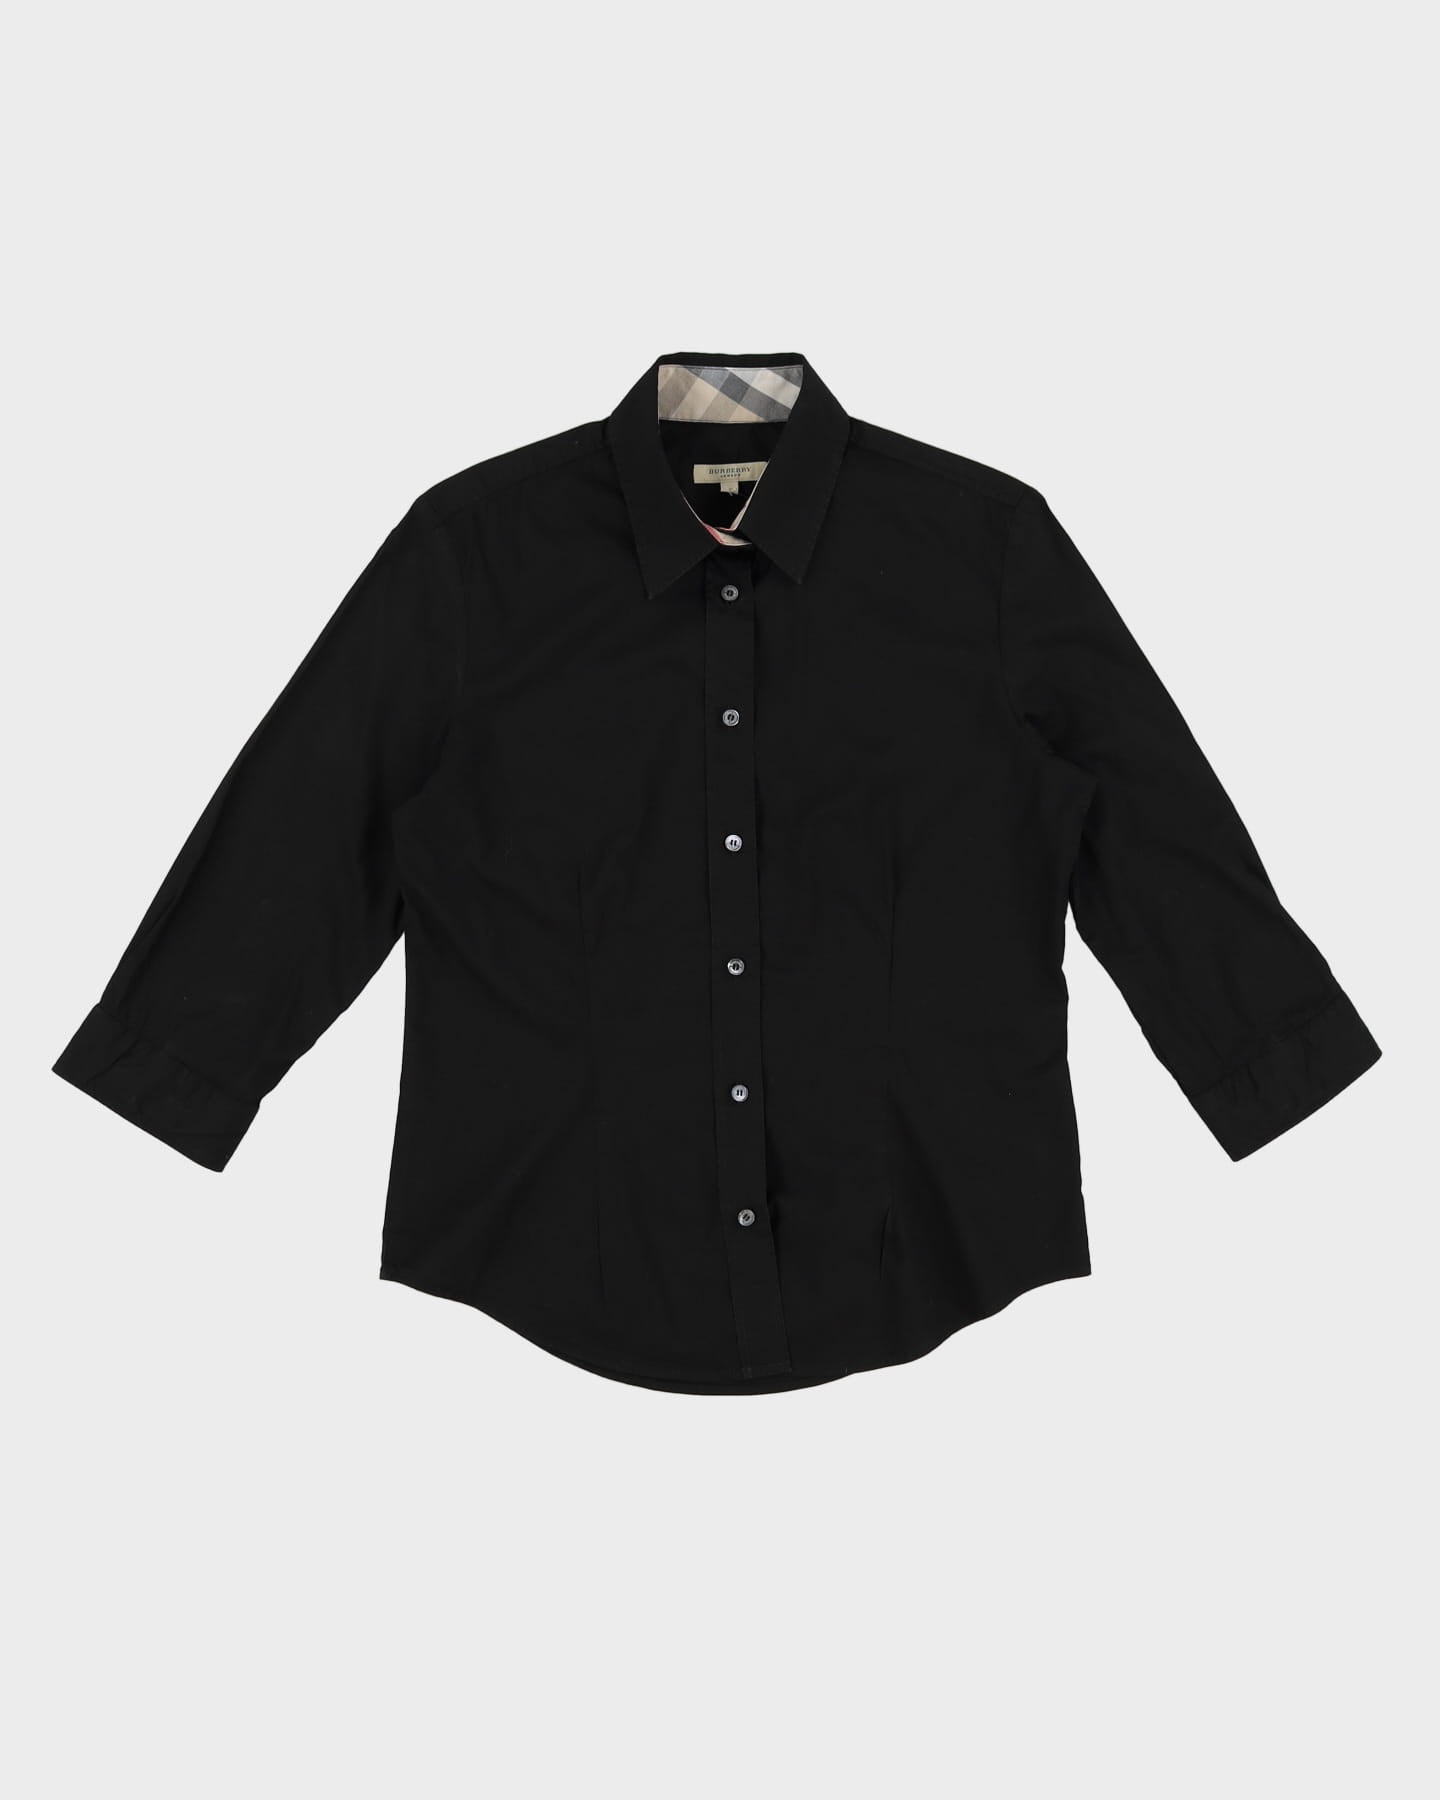 Burberry Black 3/4 Length Sleeve Blouse - S